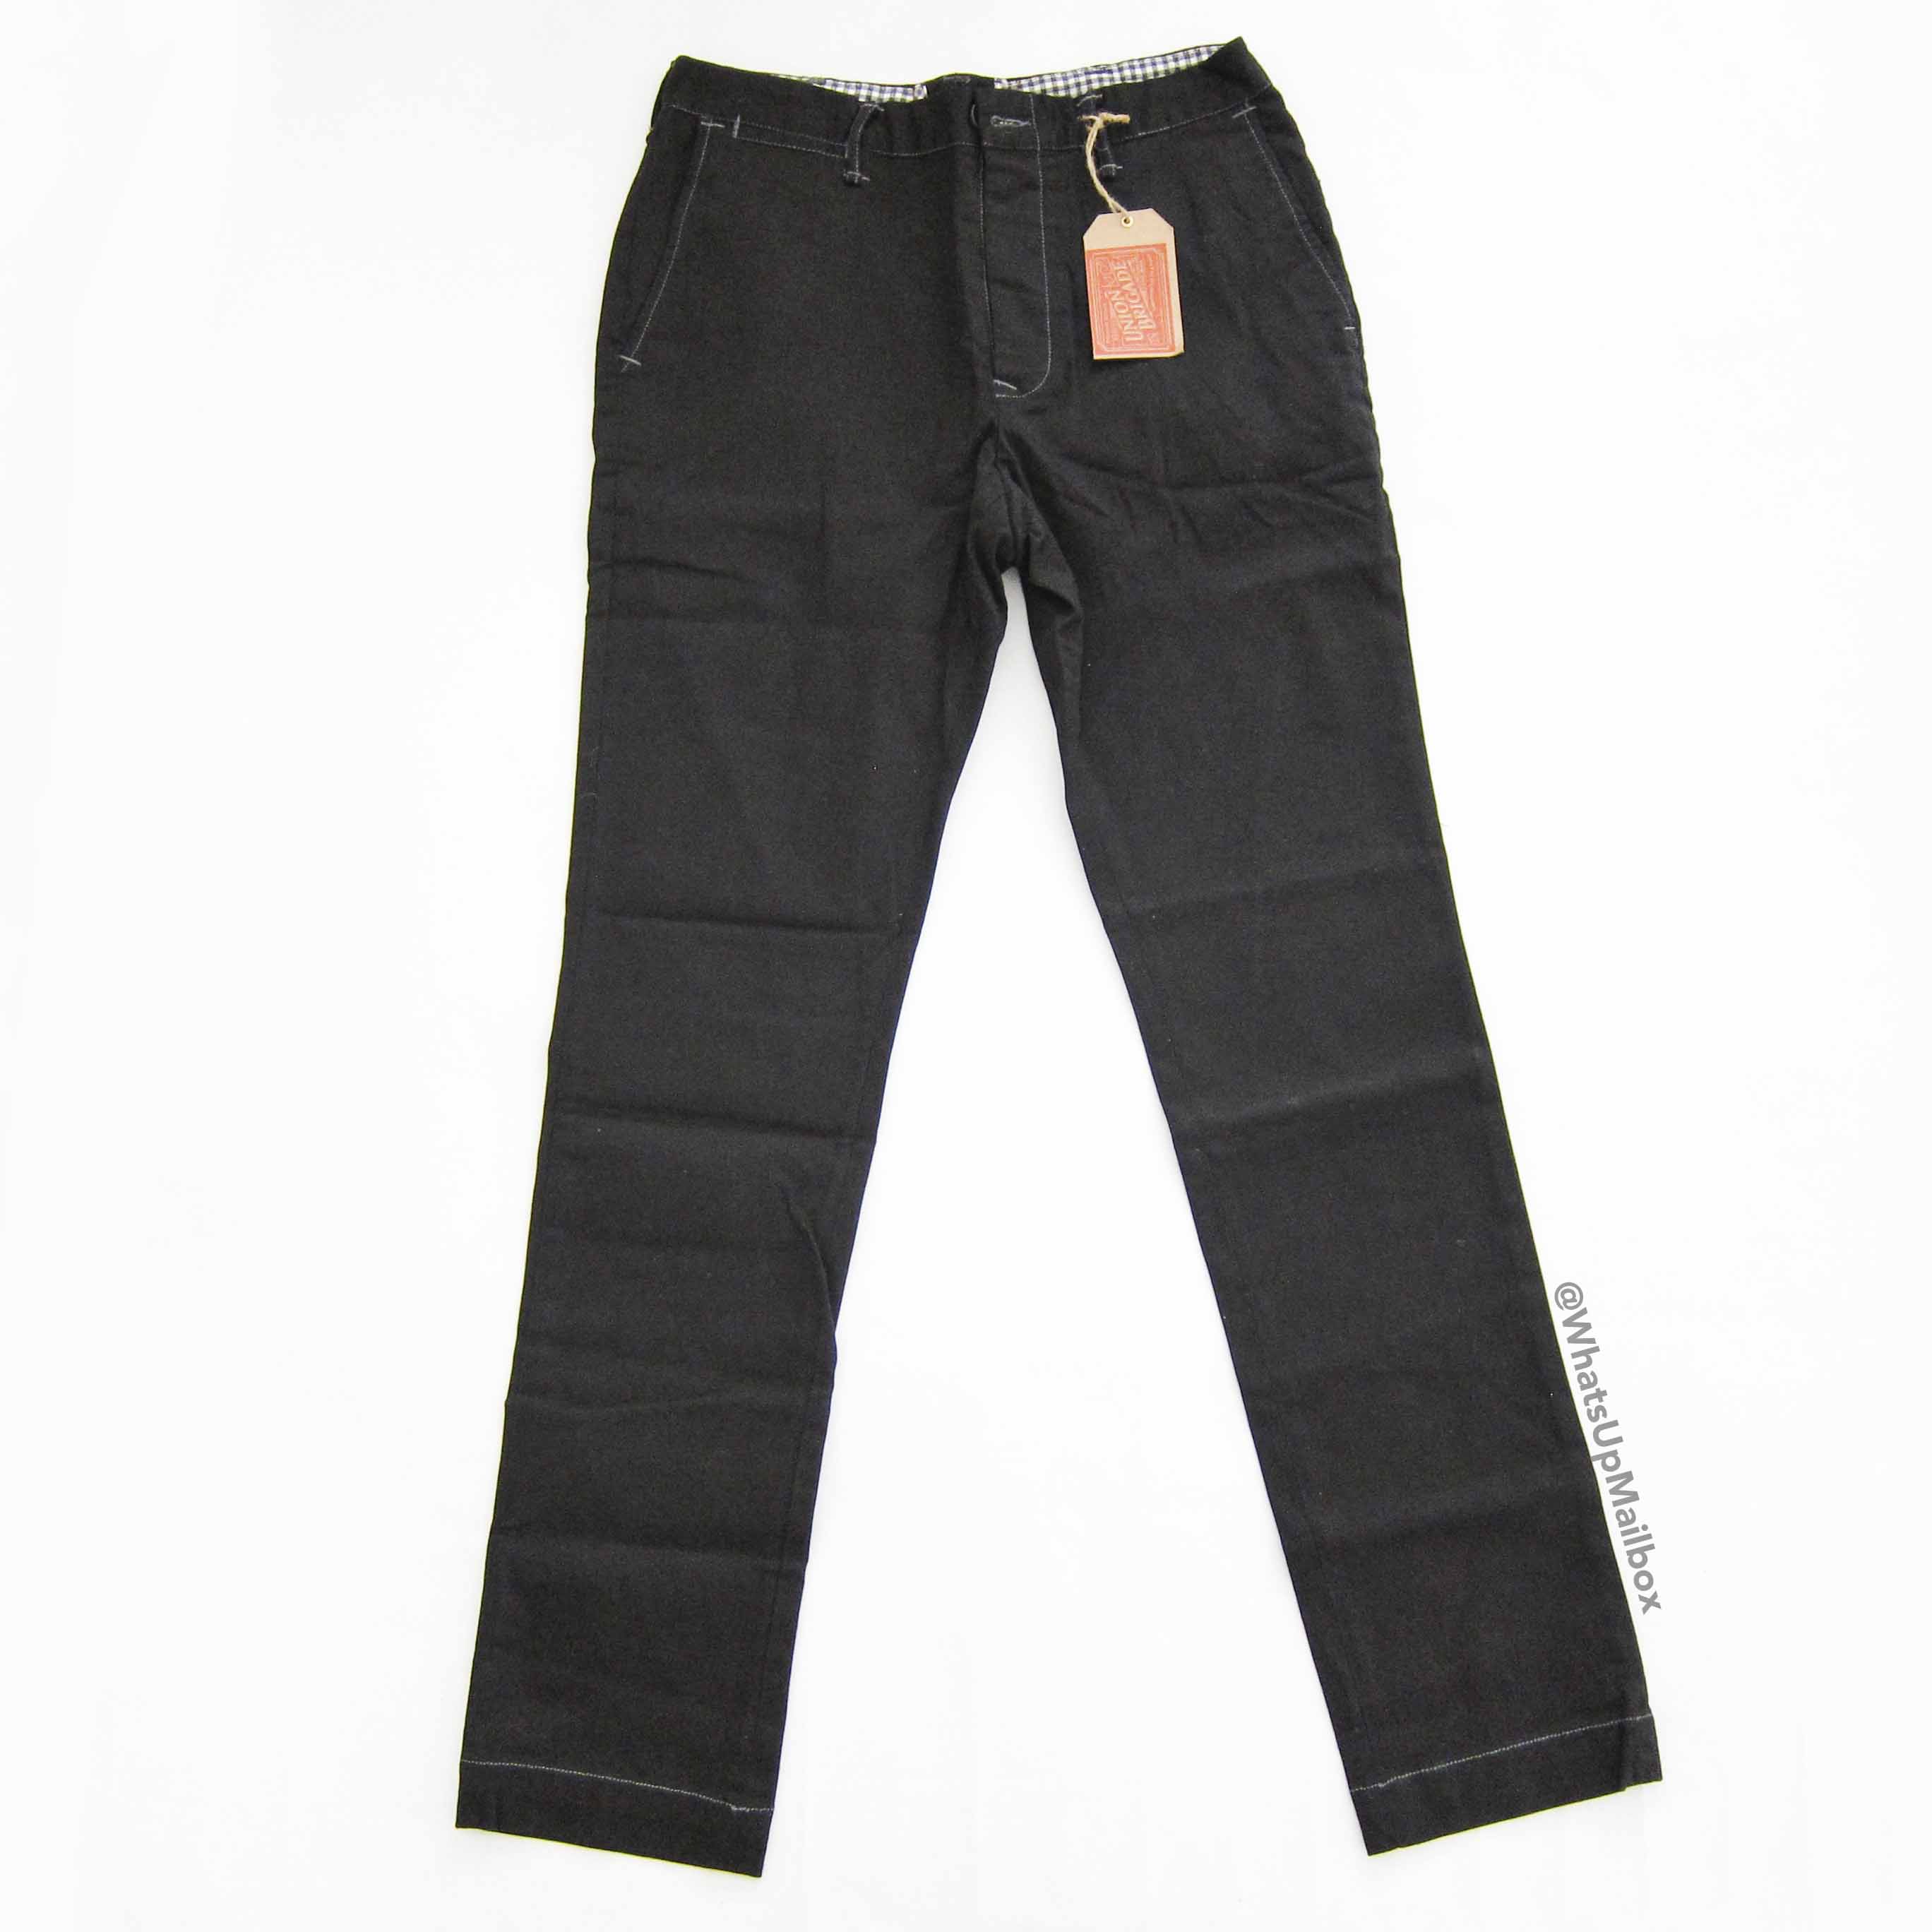 Trendy Butler - Union Brigade Black Jeans